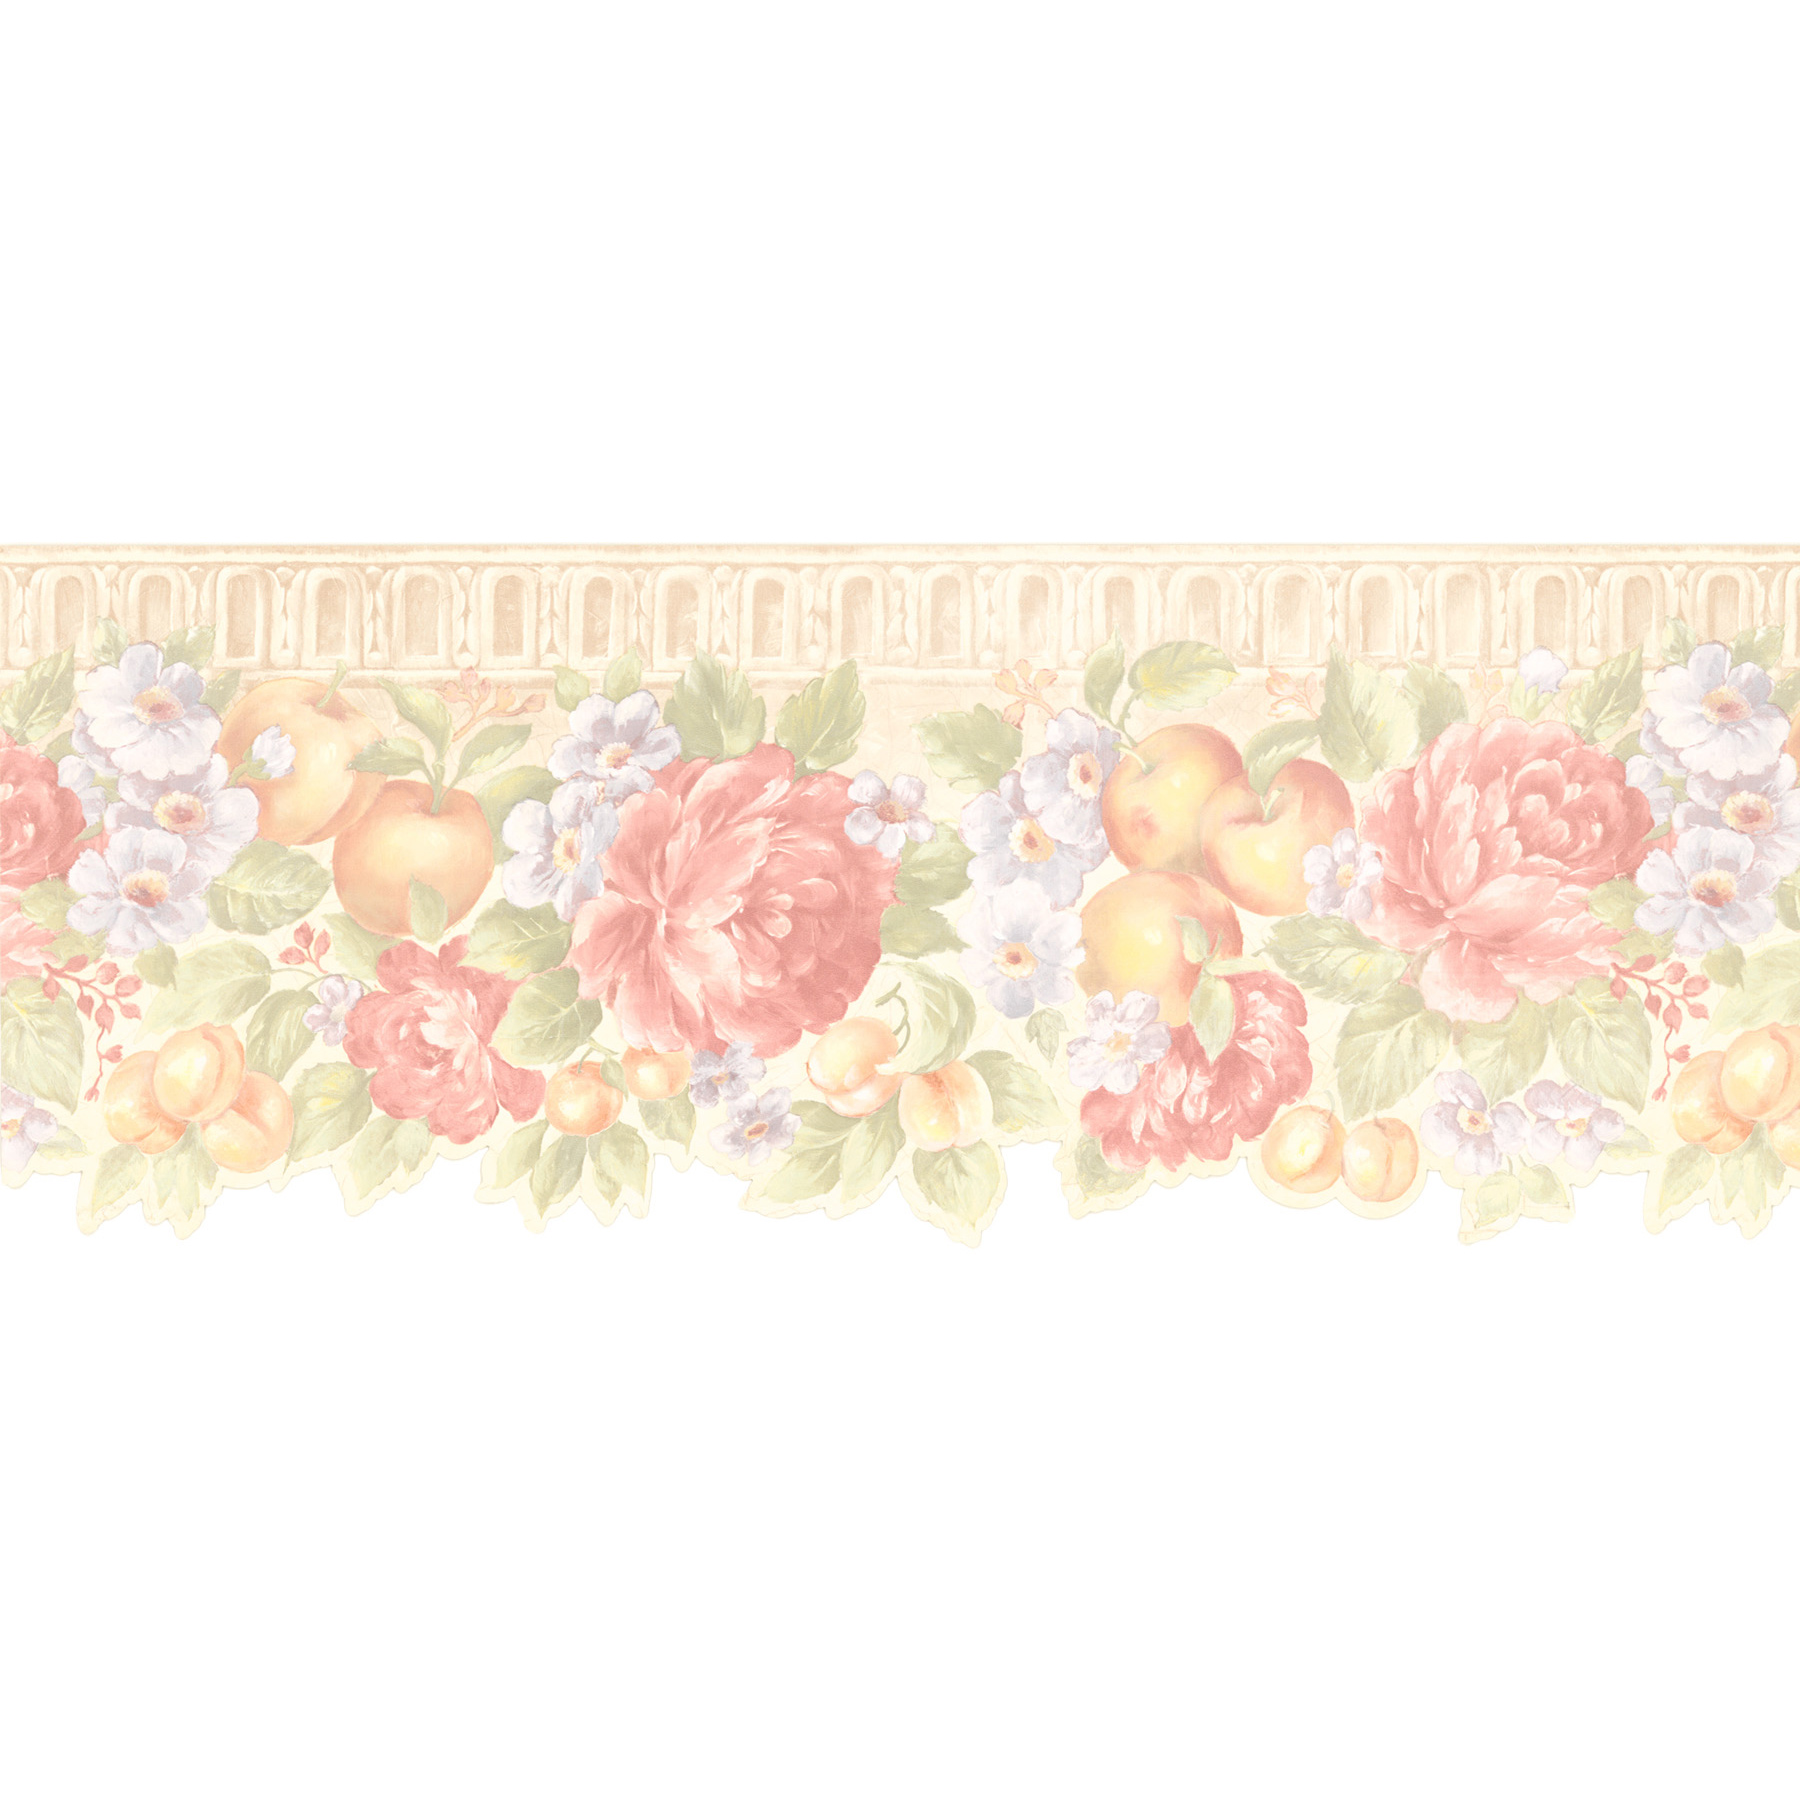 Brewster Peach Fruit Floral Border Wallpaper 543de175 B663 447a 85f7